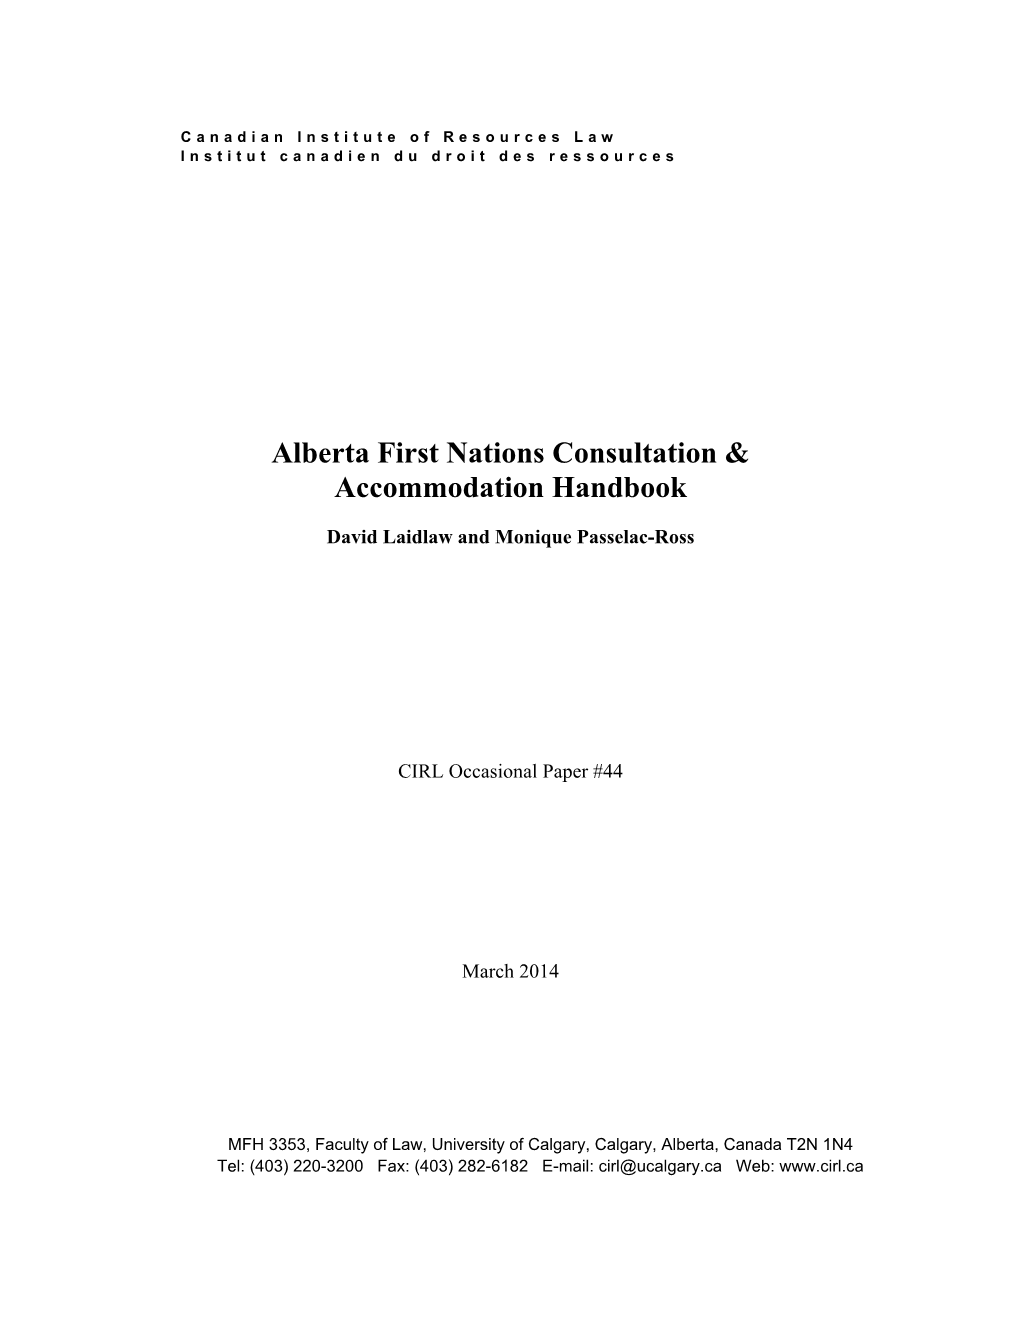 Alberta First Nations Consultation & Accommodation Handbook